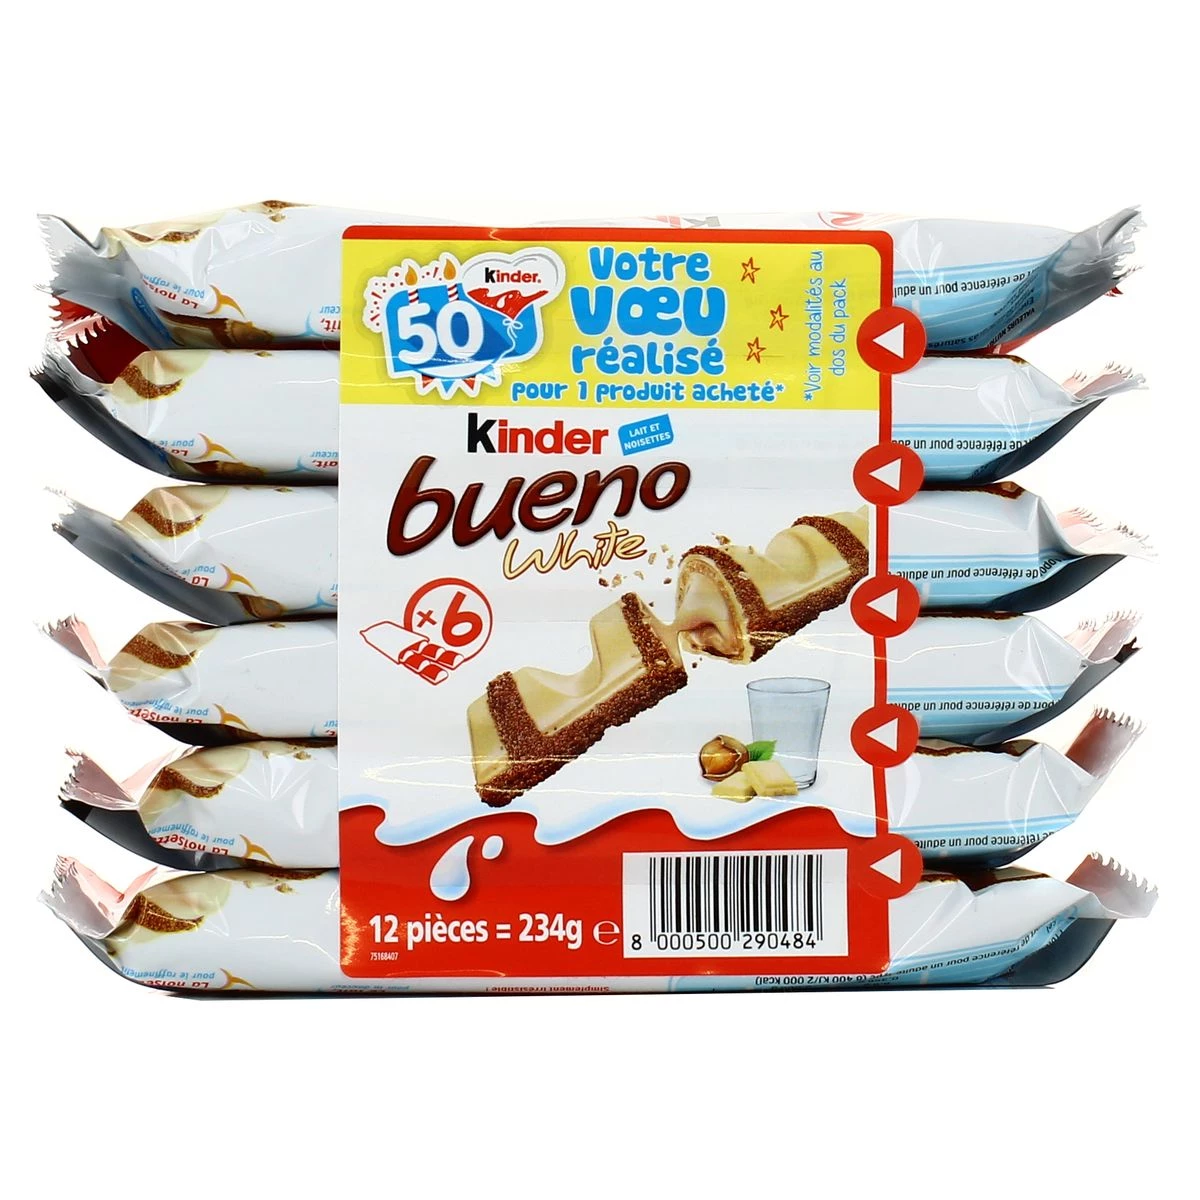 Bueno white chocolate candy bars 234g - KINDER